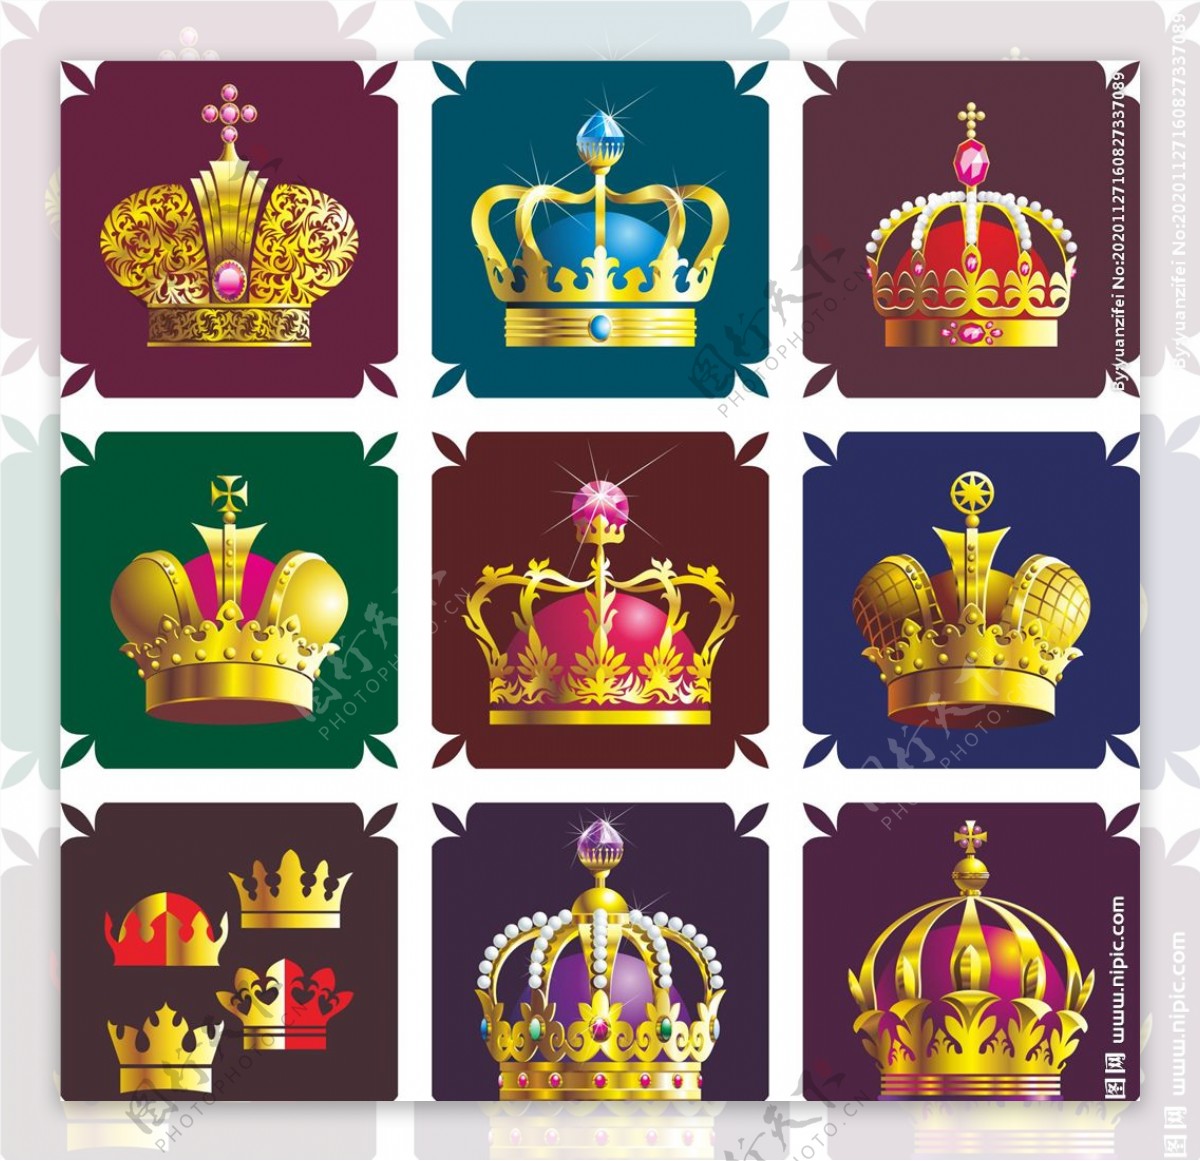 Queen Crown PNG Images Transparent Free Download | PNGMart.com